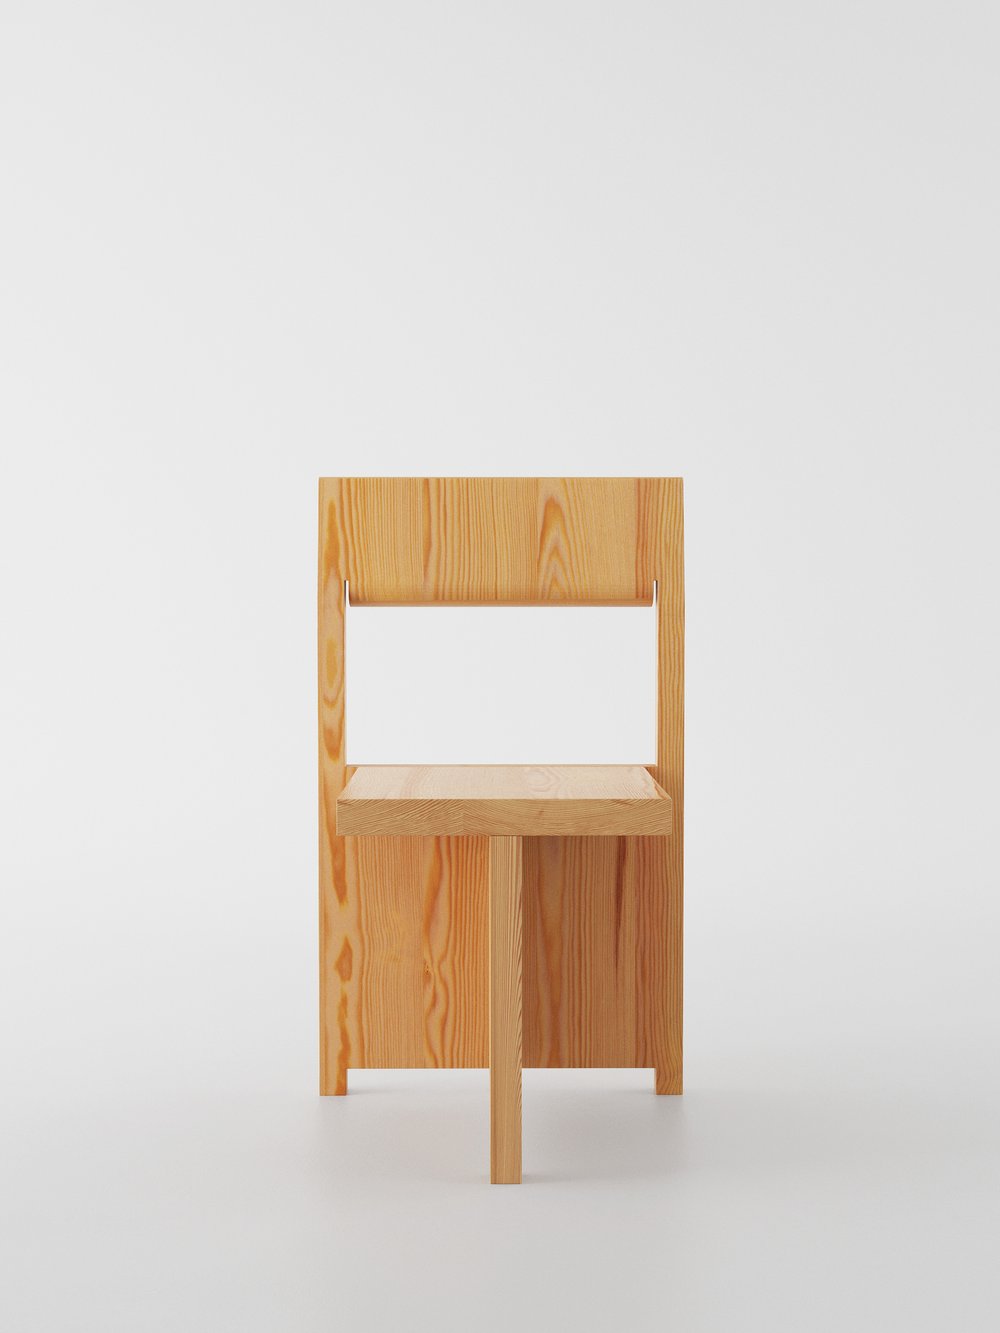 Plank chair Jangir Maddadi Design Bureau 02.jpg